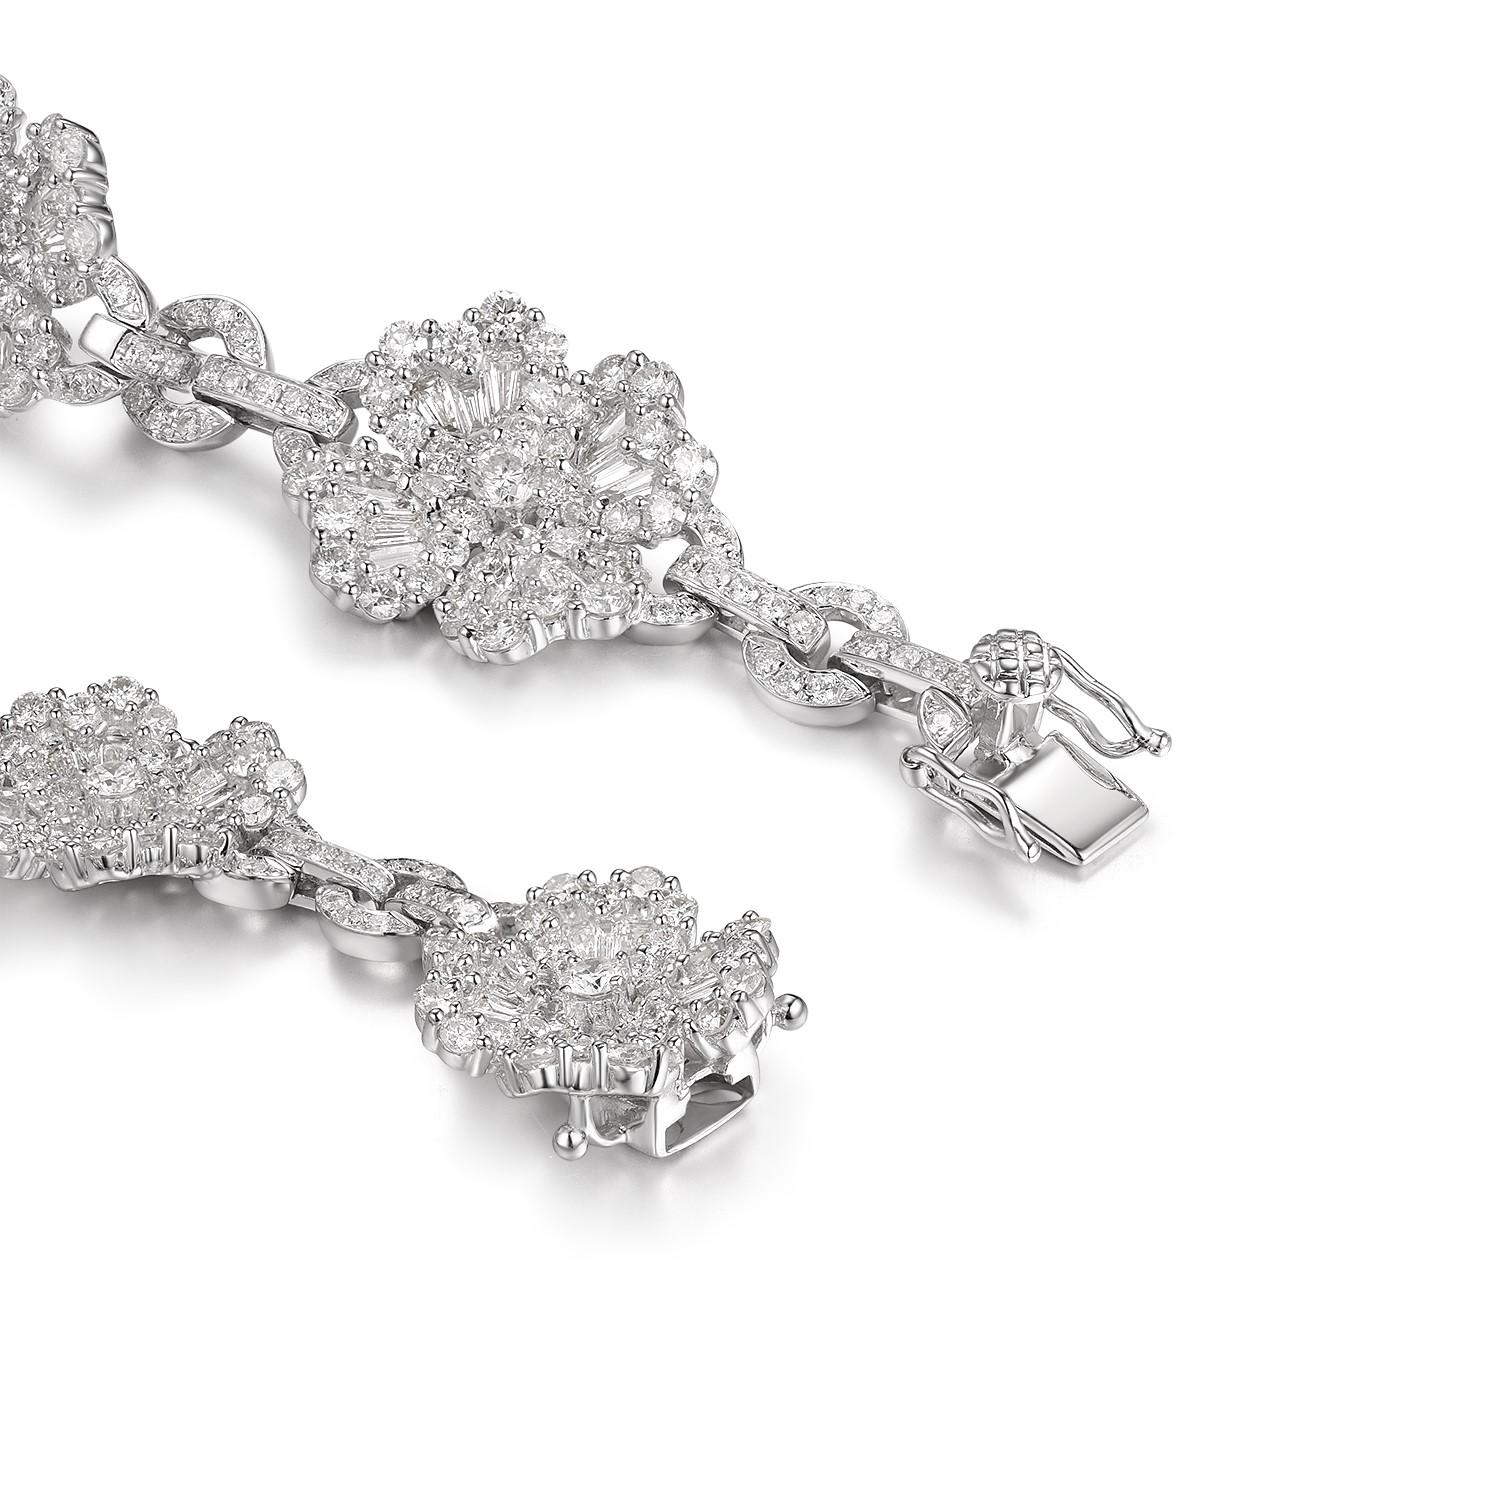  Taper Diamond flower bracelet feature 1.54 carat taper diamonds and 6.45 carat of white round diamonds.

Length 17cm Width : 14mm
Complimentary length adjustment 
Taper Diamond 1.54 carat
Round White Diamond 6.45 carat